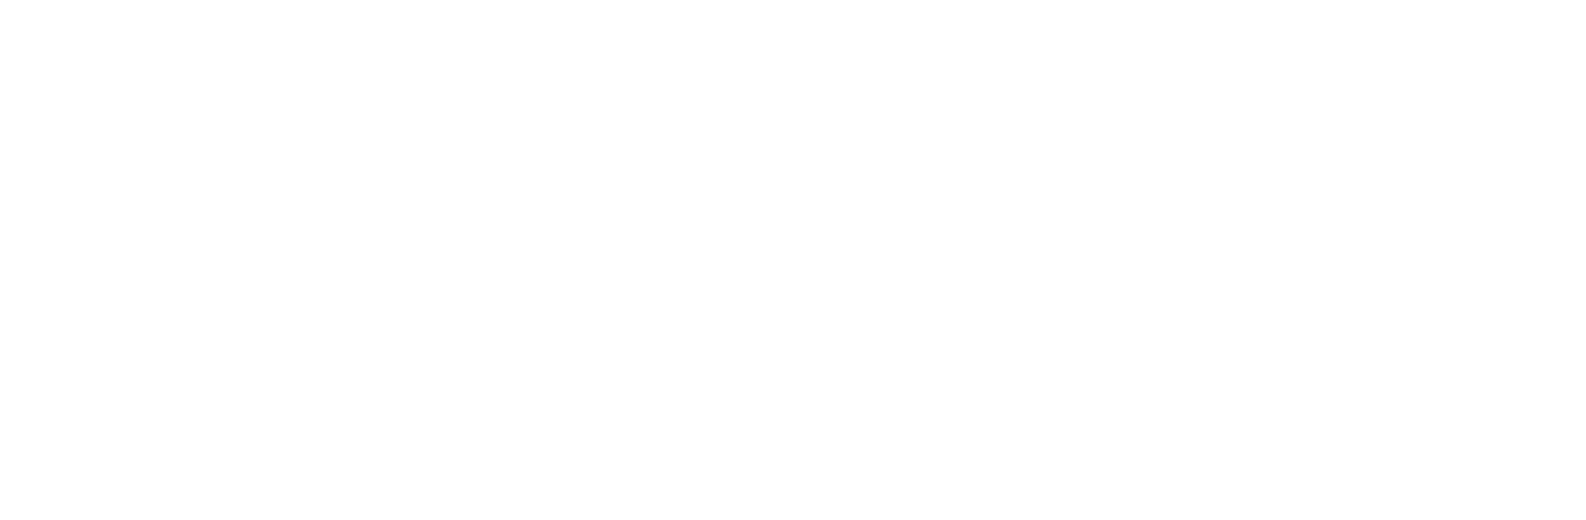 Revvity logo large for dark backgrounds (transparent PNG)